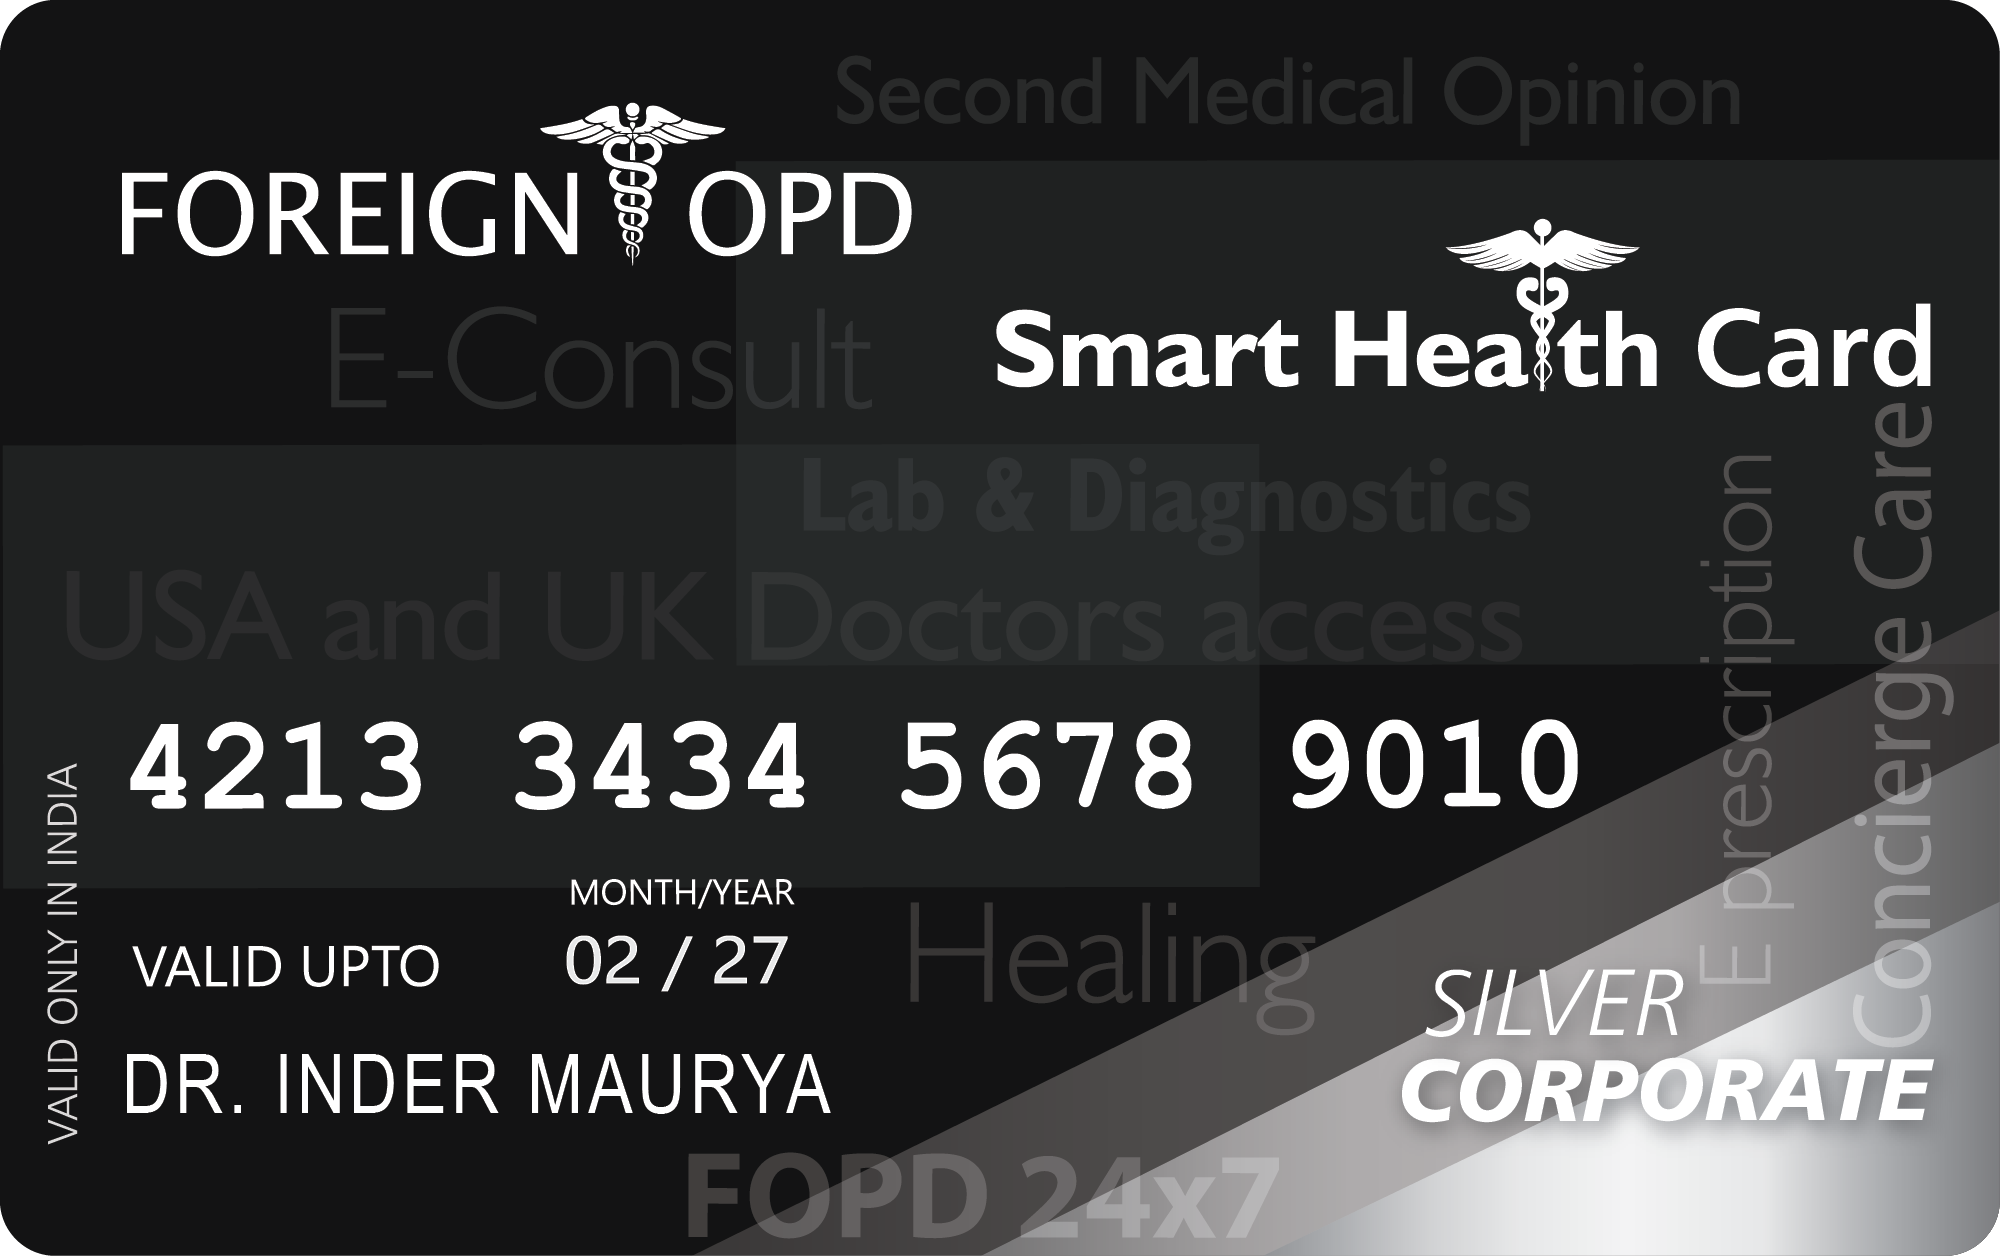 FOPD Smart Health cards